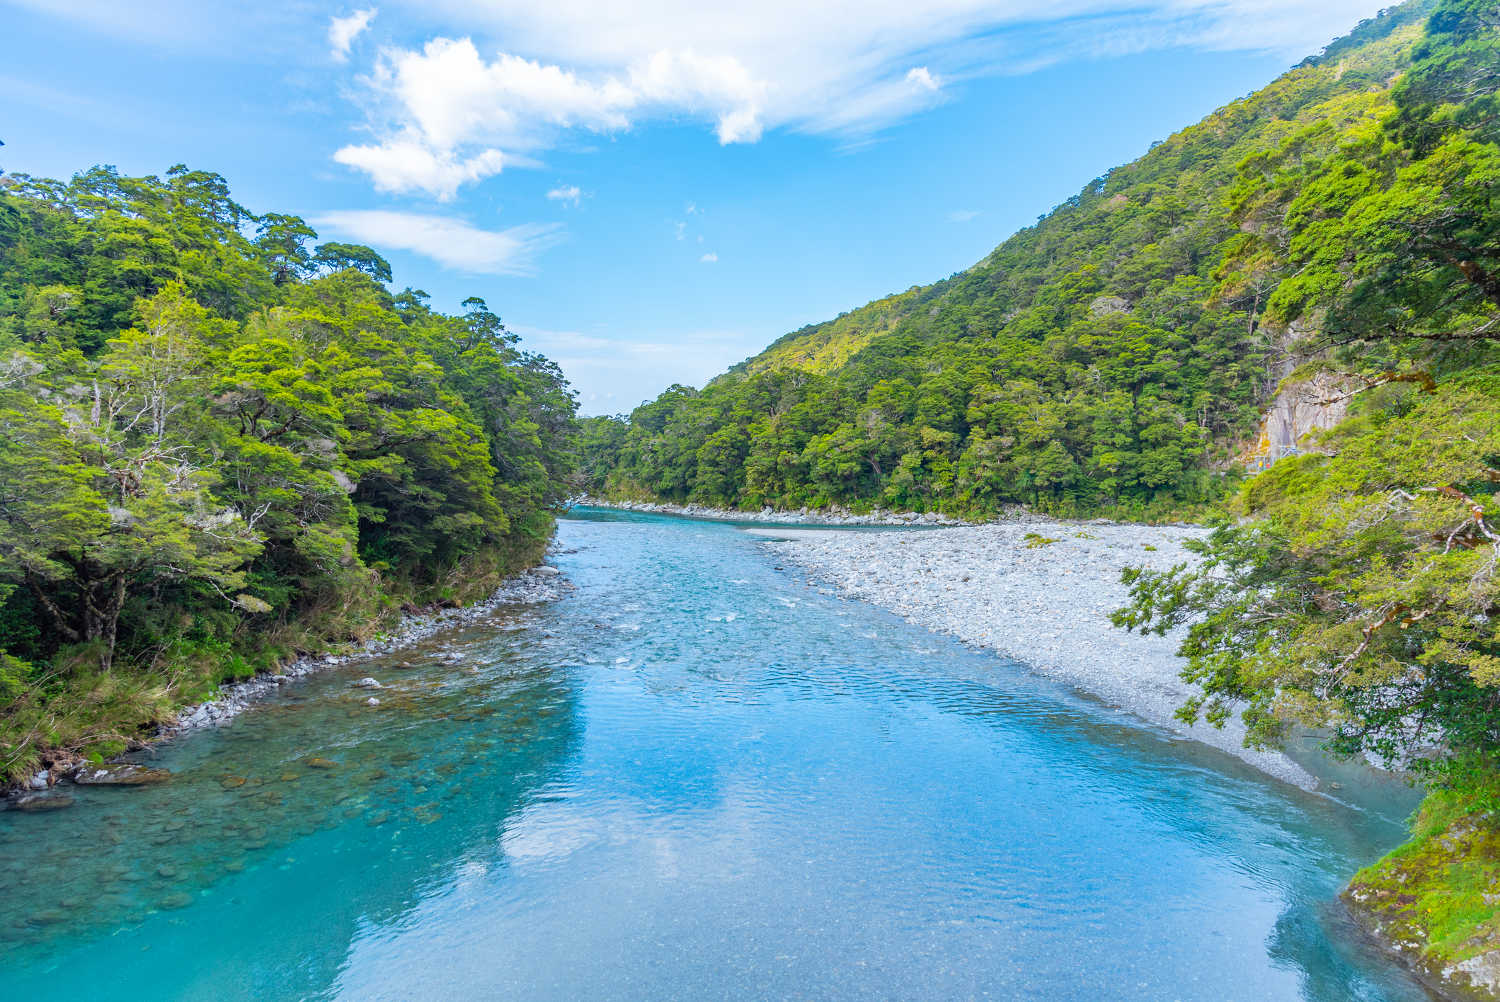 Makarora river in New Zealand